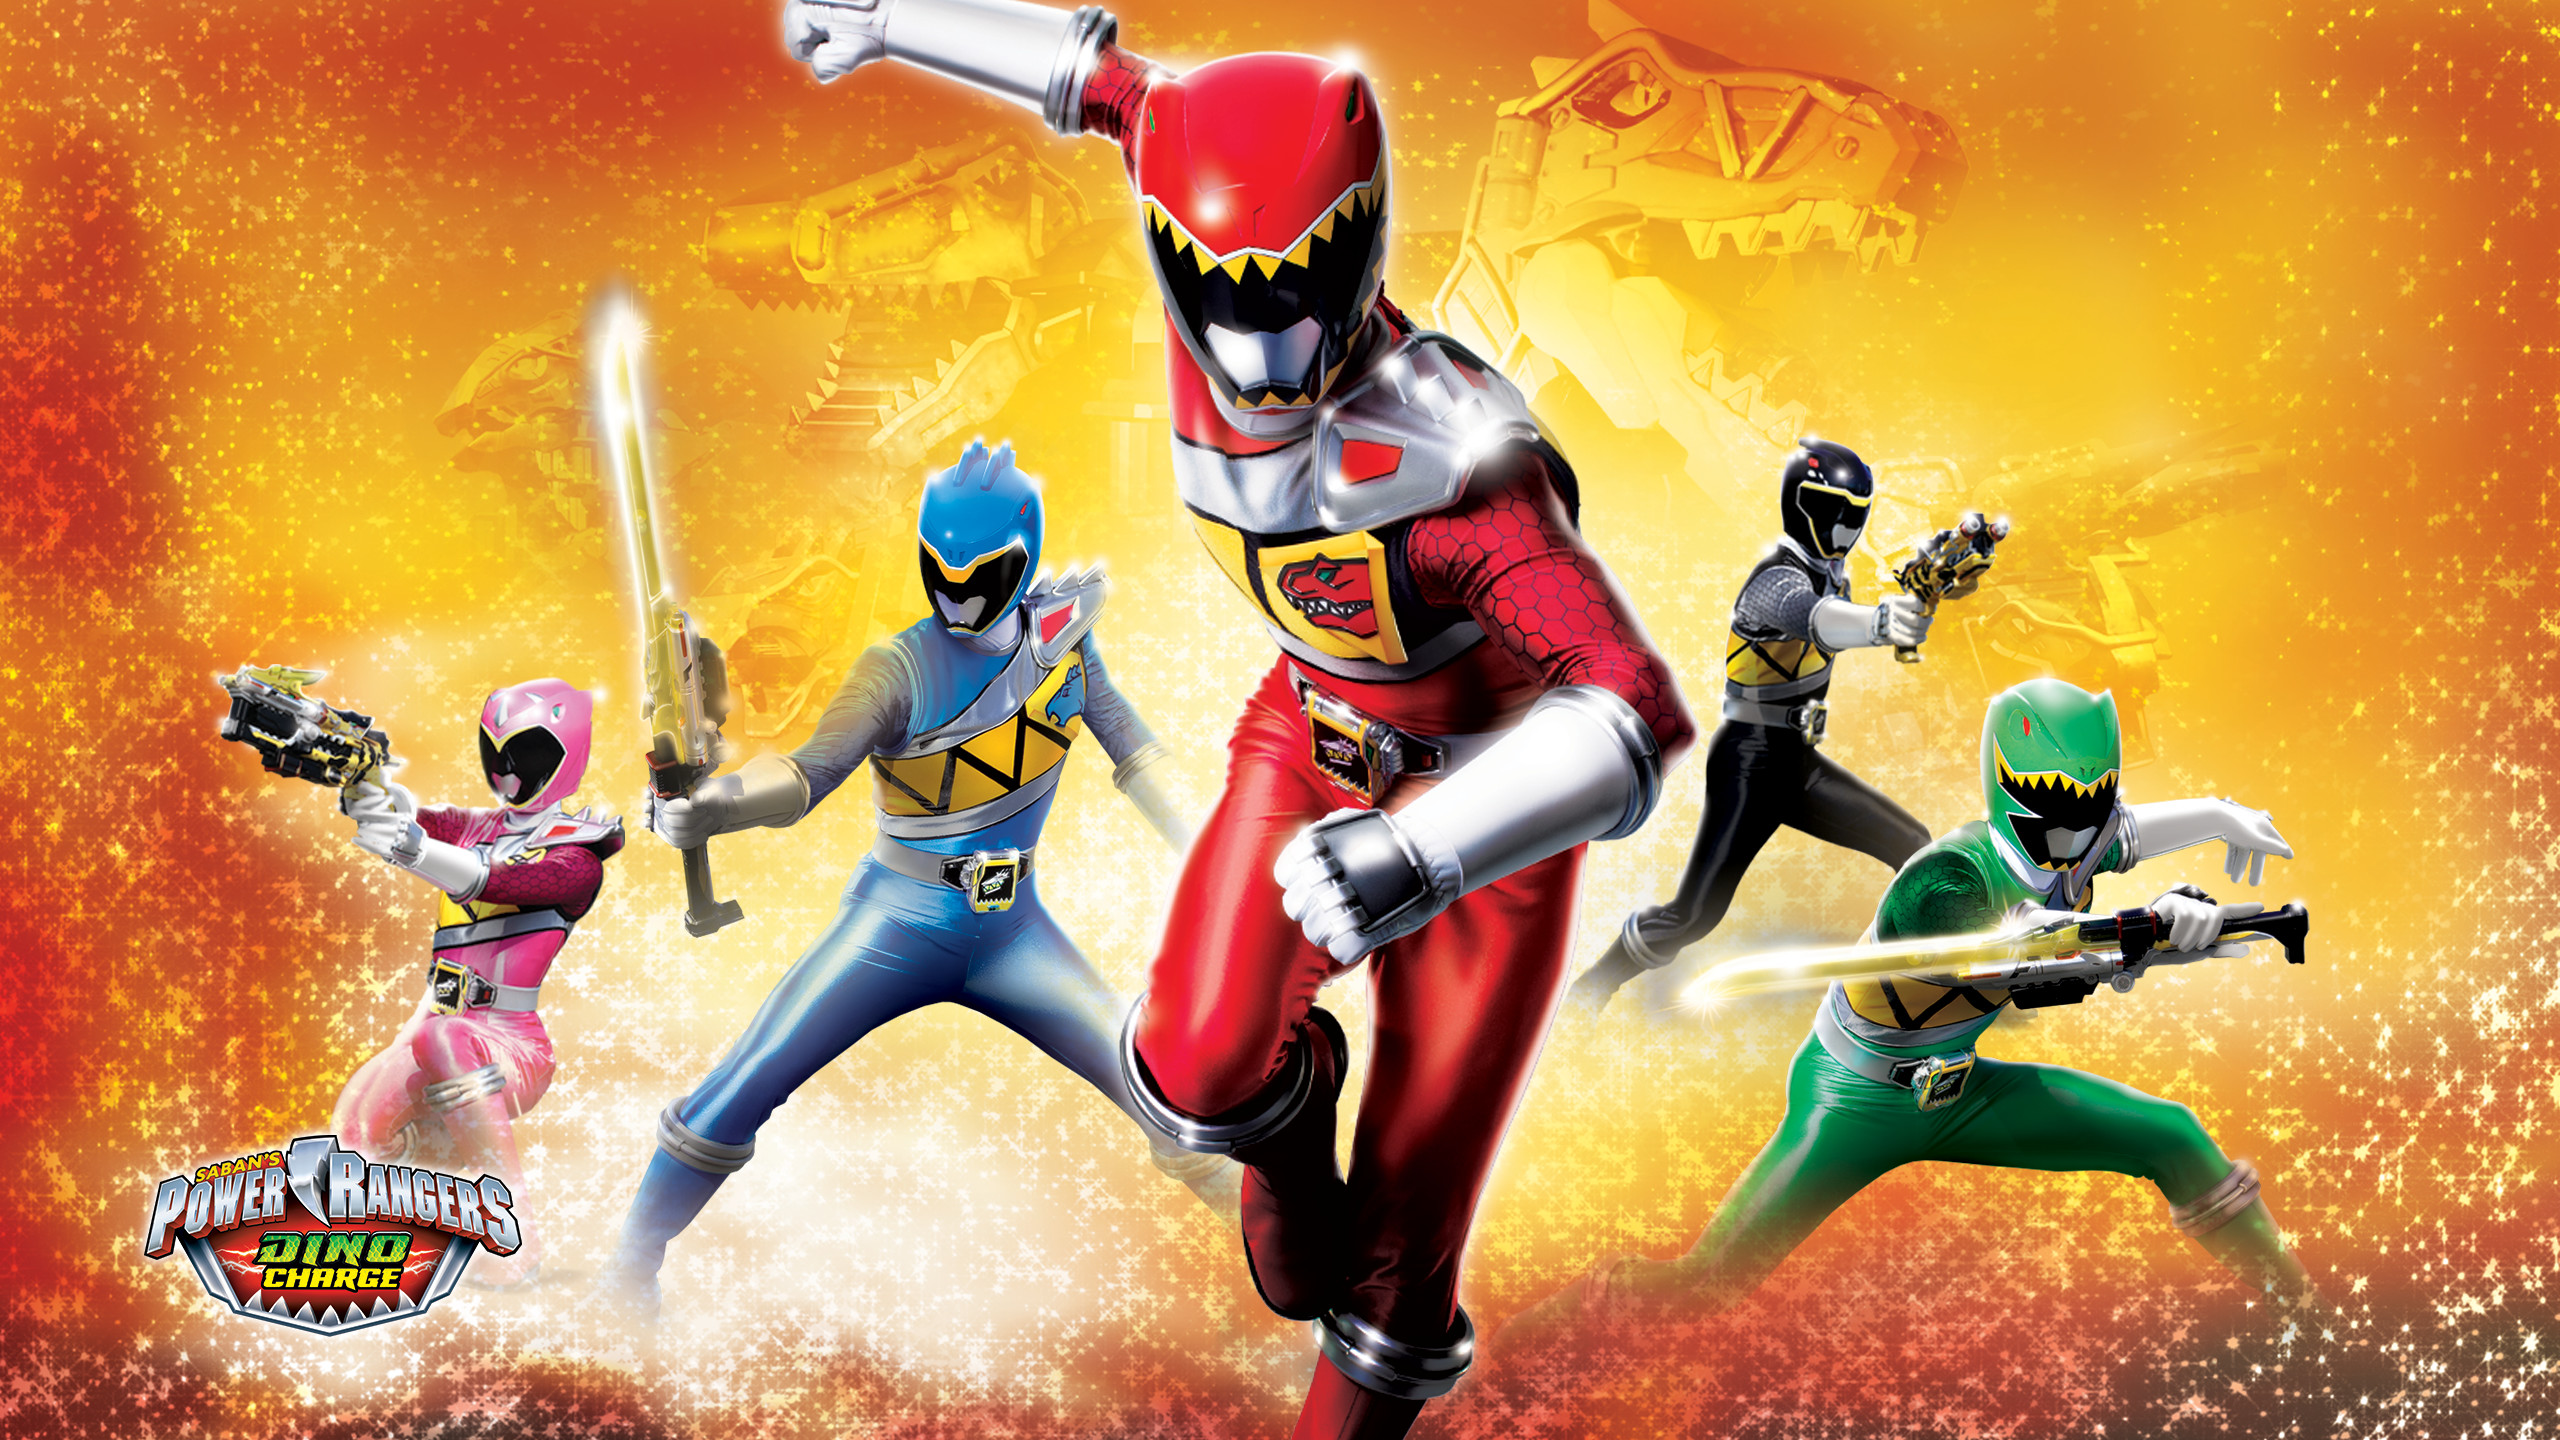 Power Rangers Super Megaforce Wallpaper Image